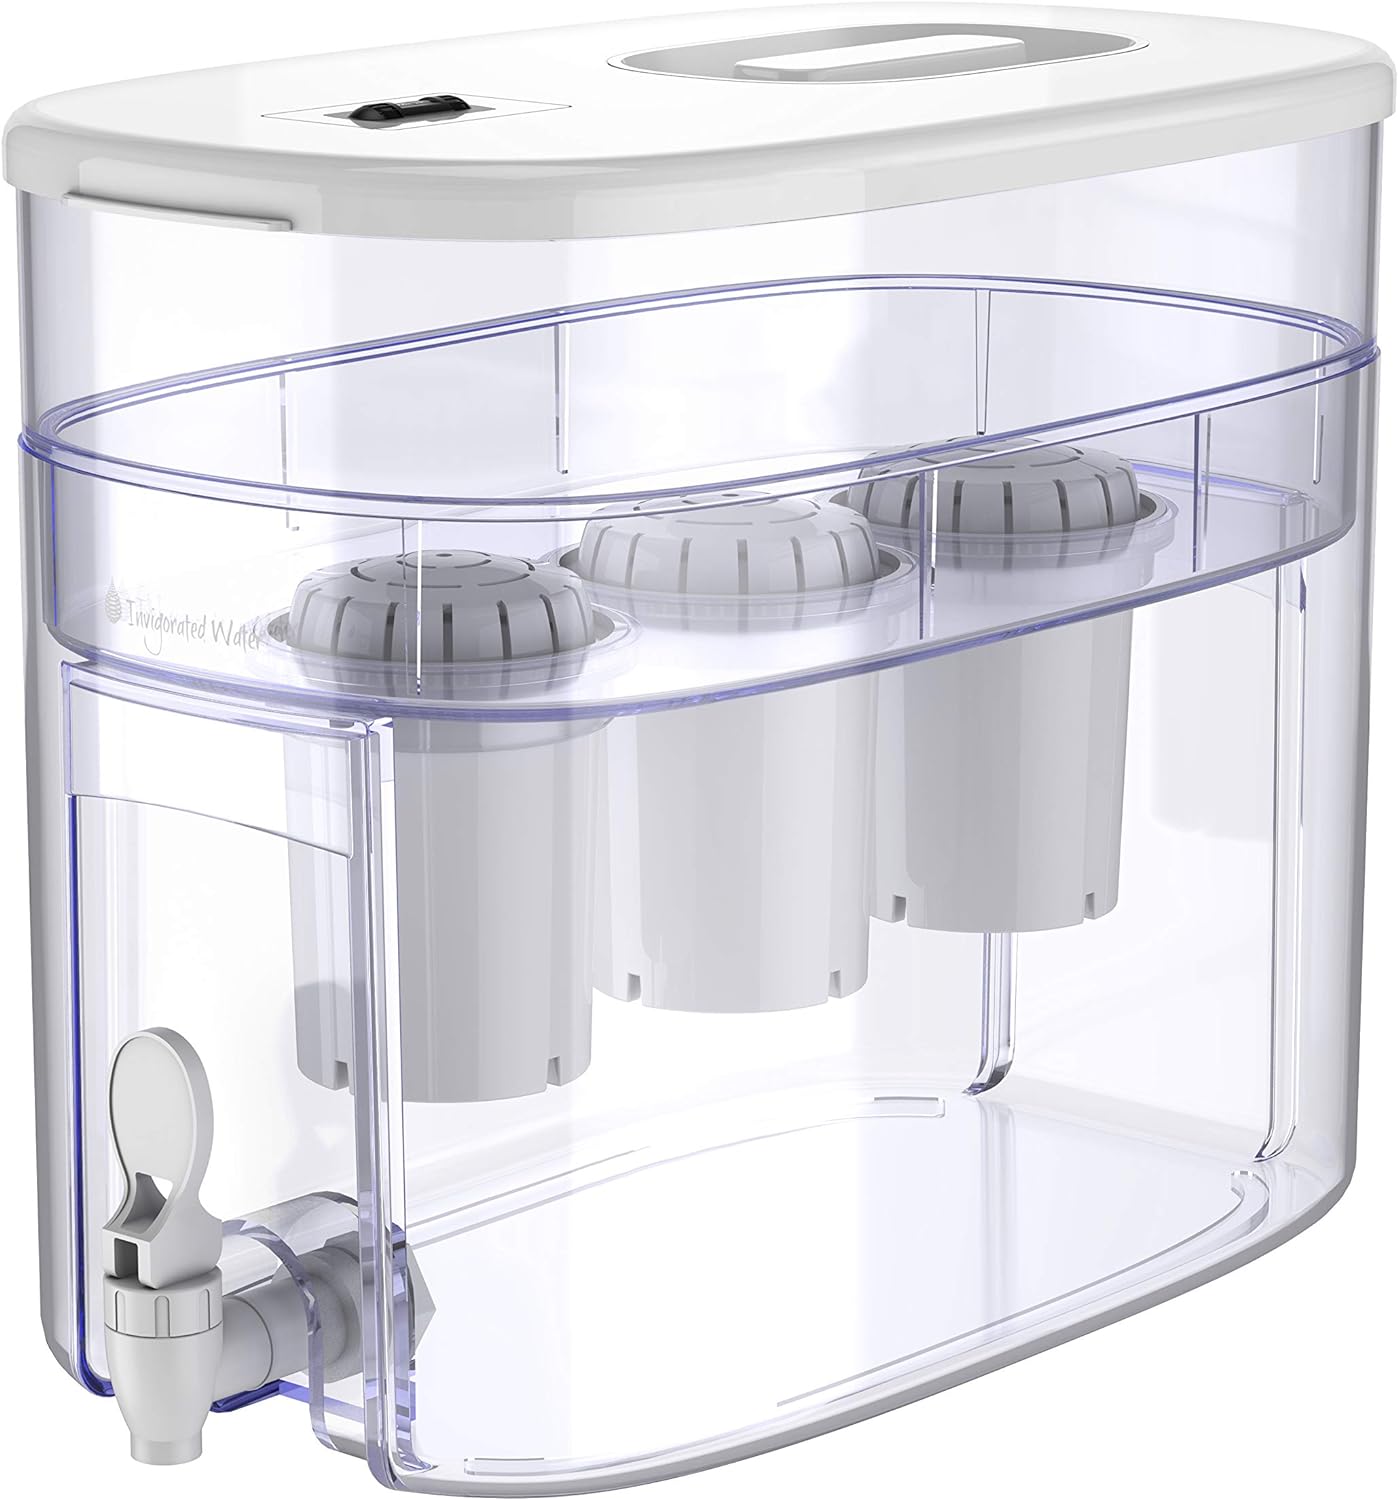 Invigorated Water Alkaline Water Machine Review